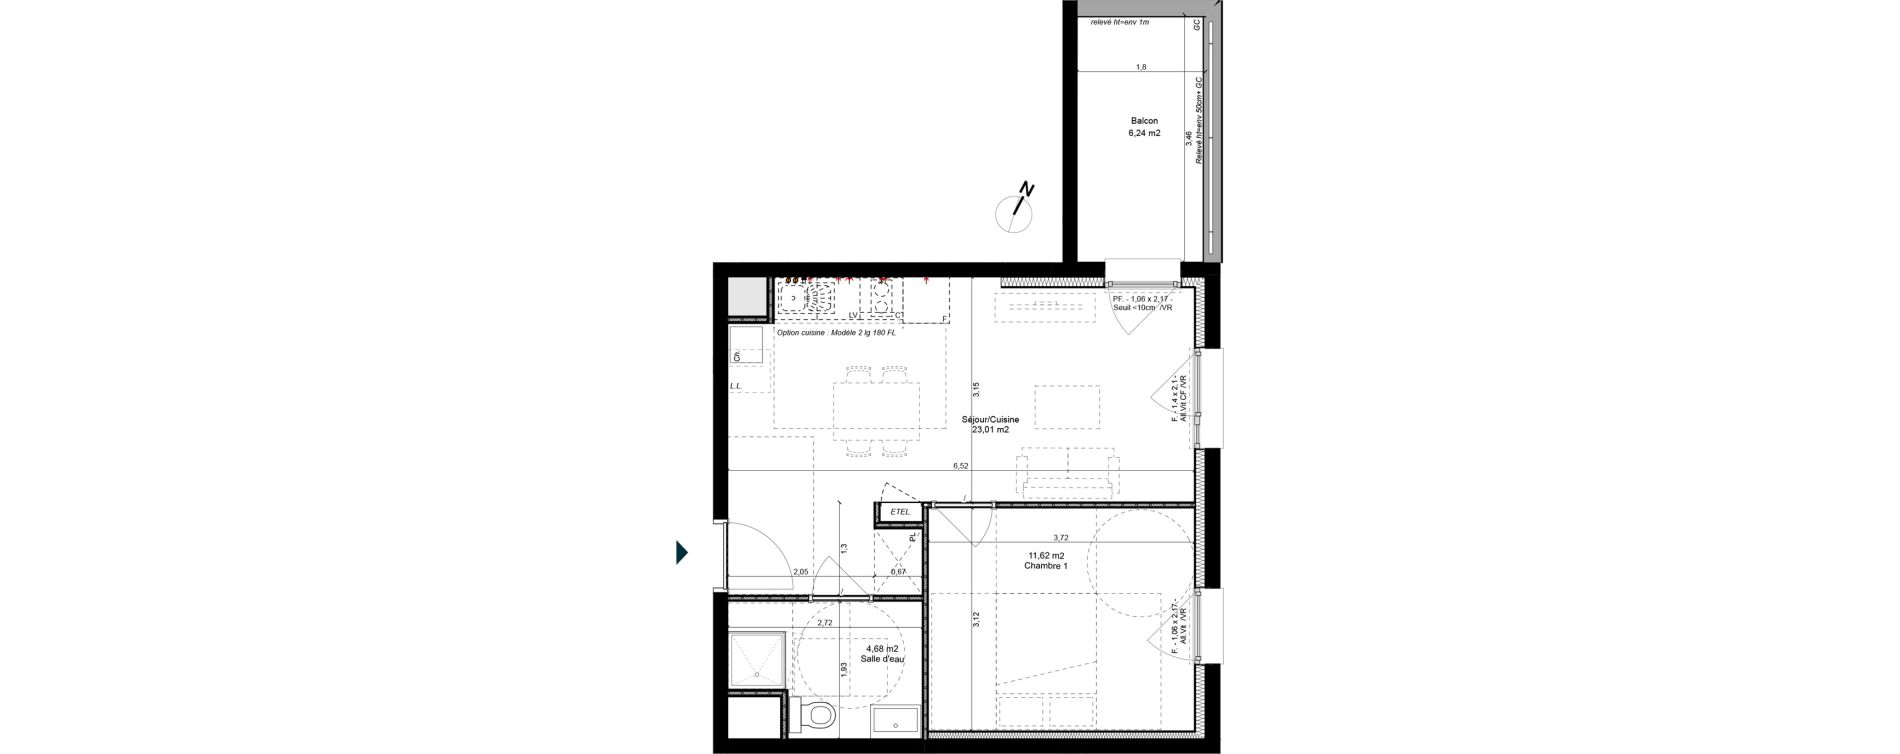 Appartement T2 de 39,32 m2 &agrave; Metz Patrotte - metz nord